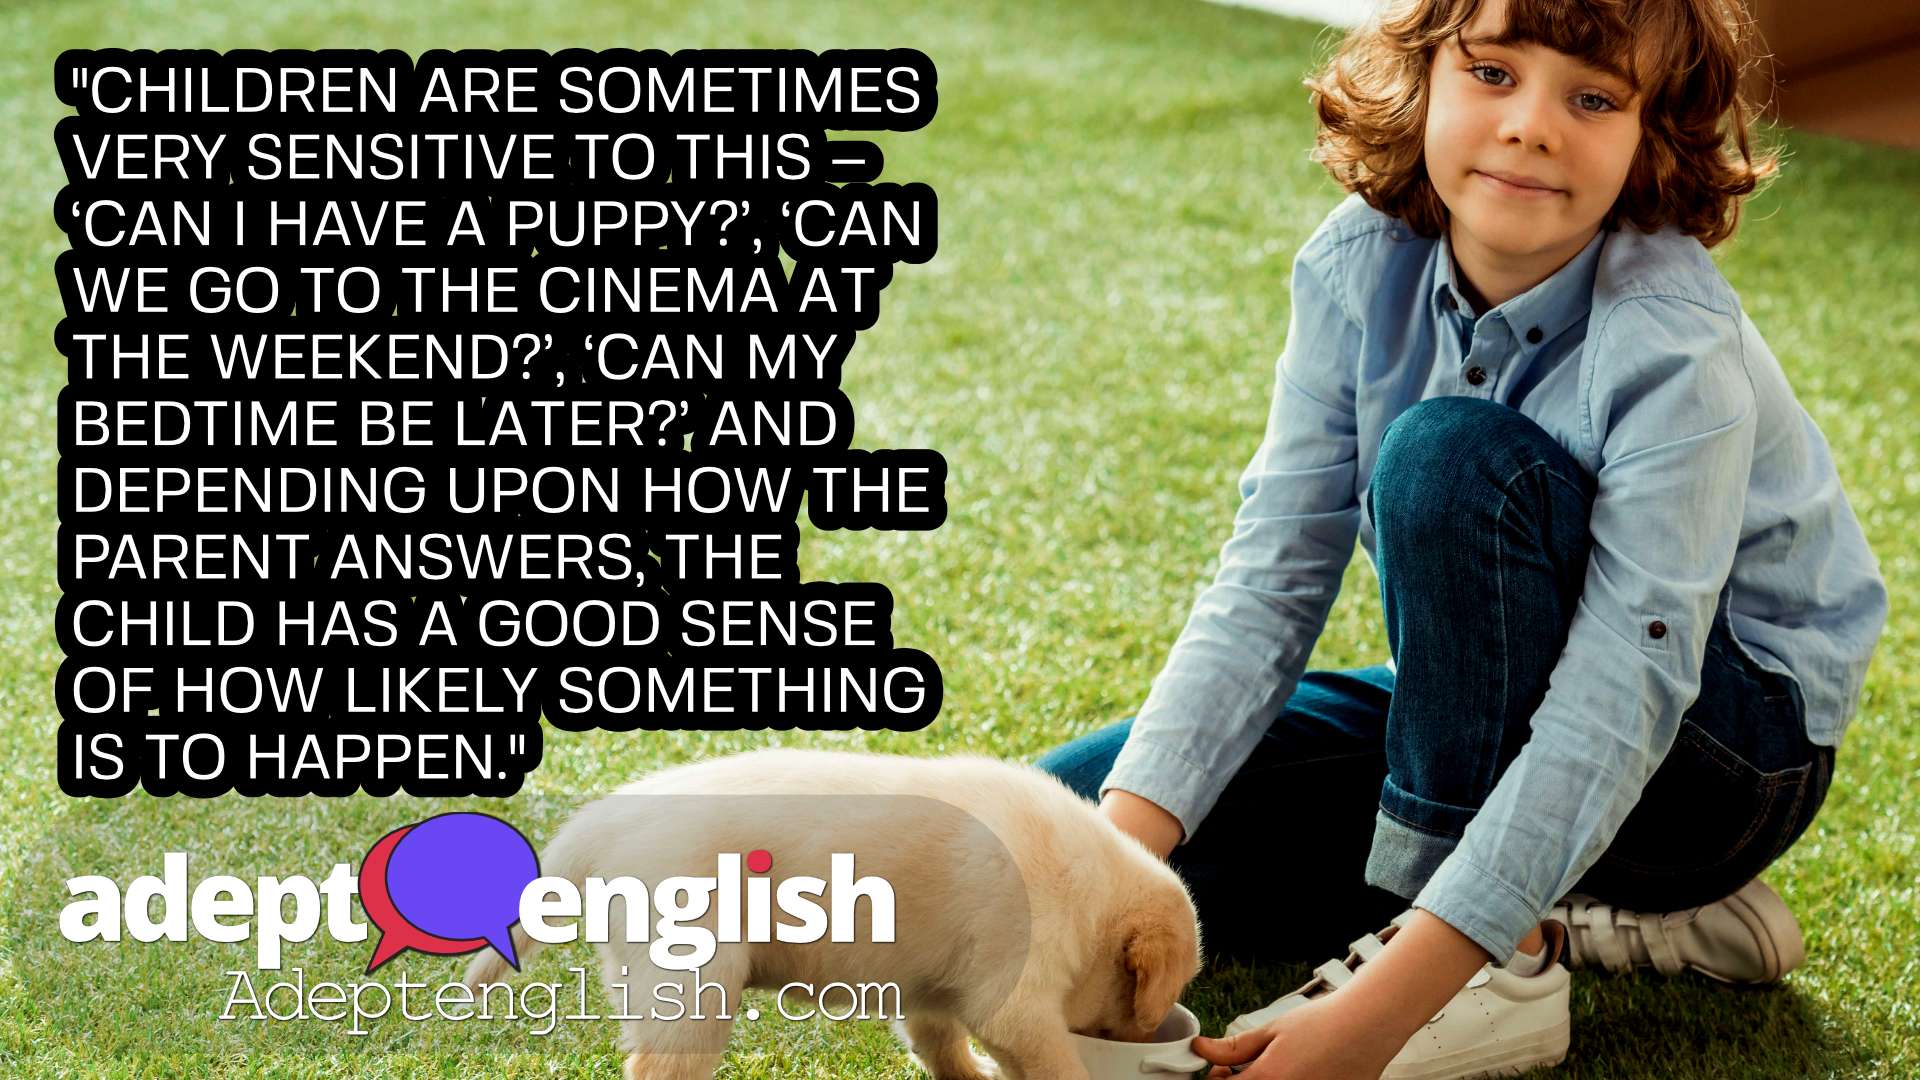 A photograph of a boy feeding his Labrador puppy on grass. English grammar - Using English adverbs for probability.